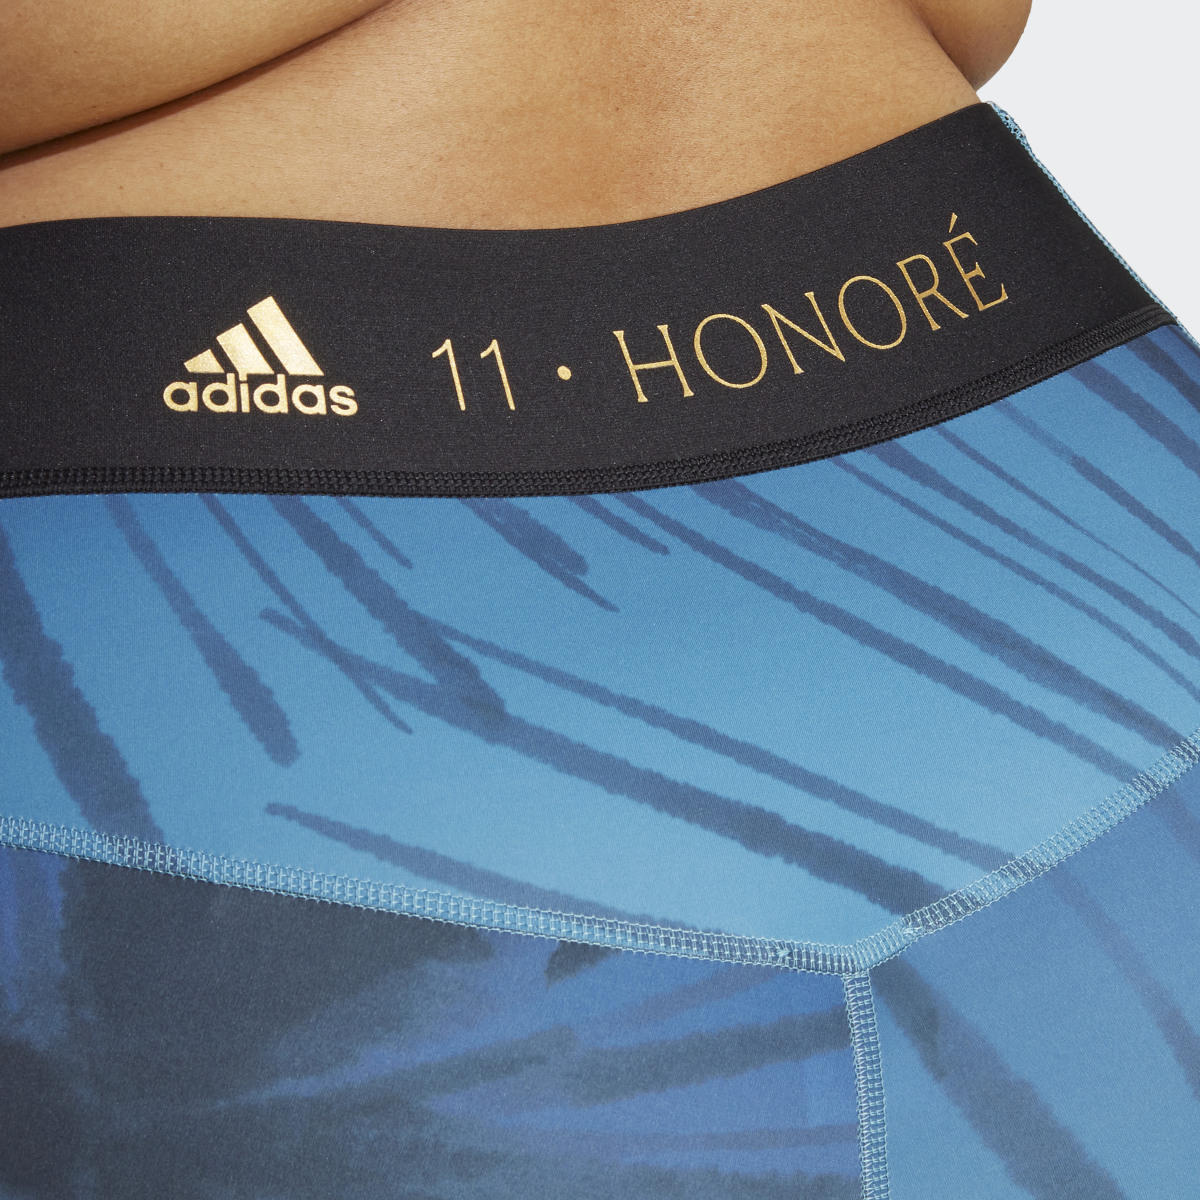 Adidas x 11 Honoré 7/8-Length Studio Leggings (Plus Size). 5